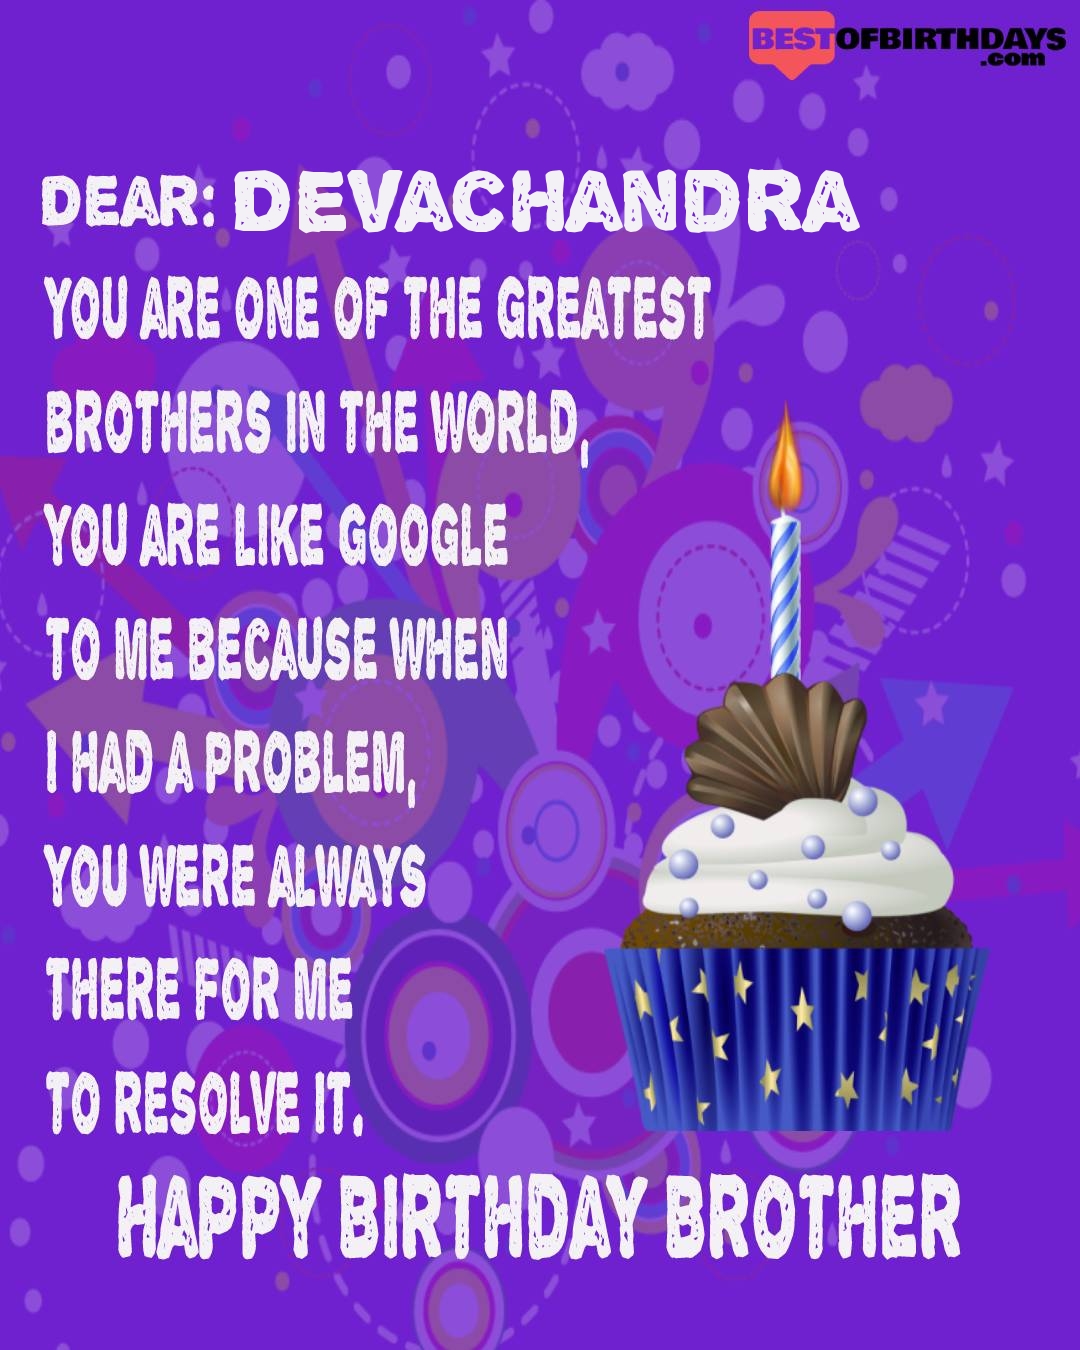 Happy birthday devachandra bhai brother bro